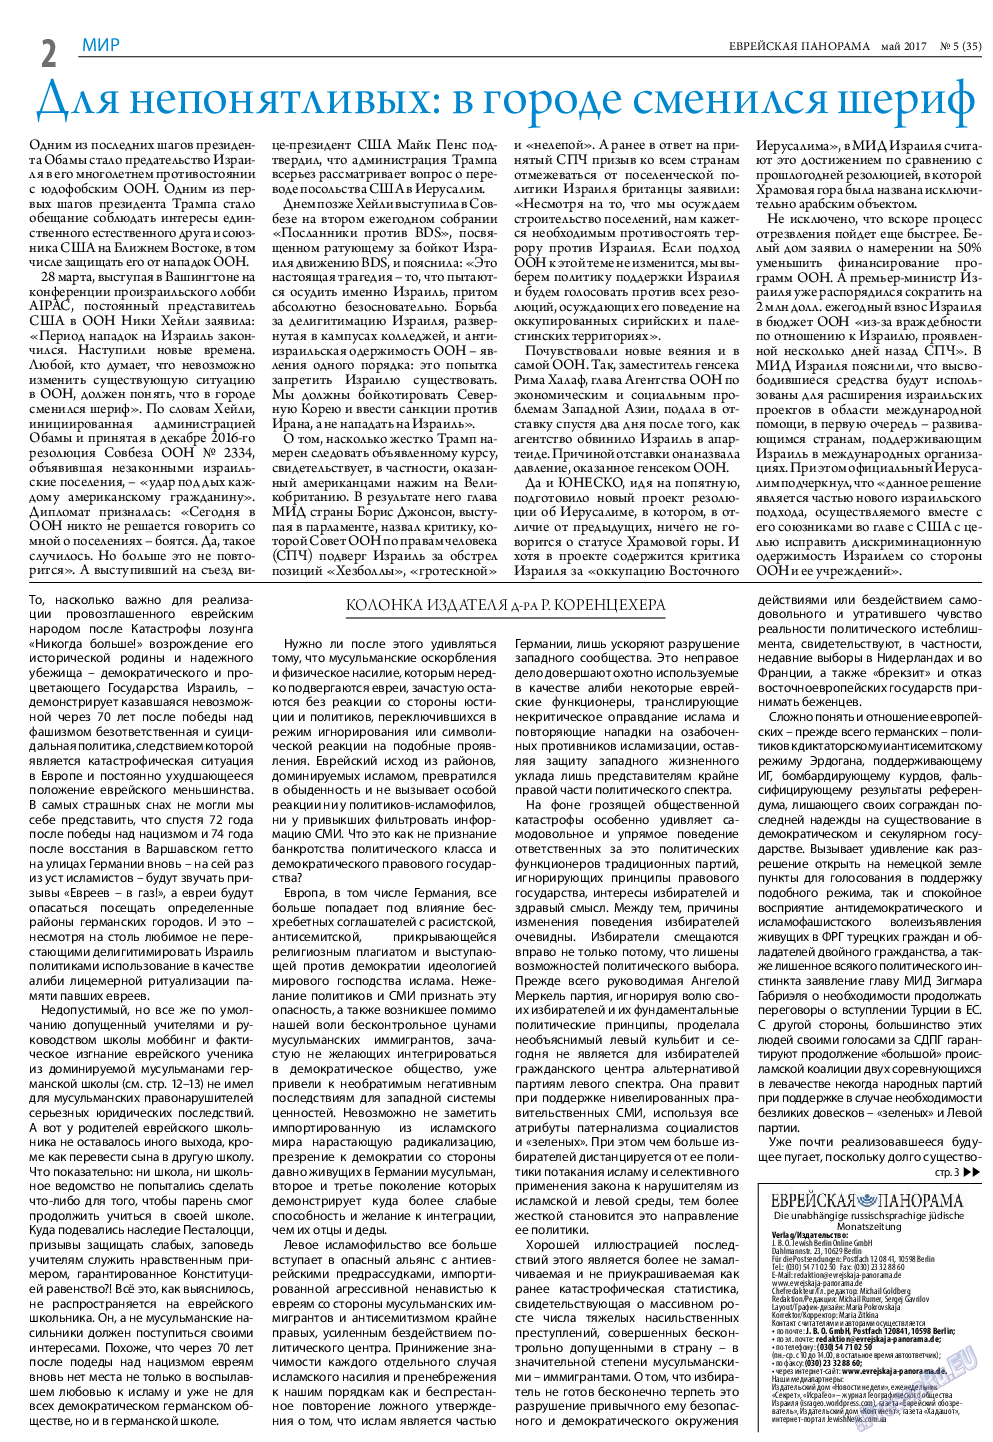 Еврейская панорама, газета. 2017 №5 стр.2